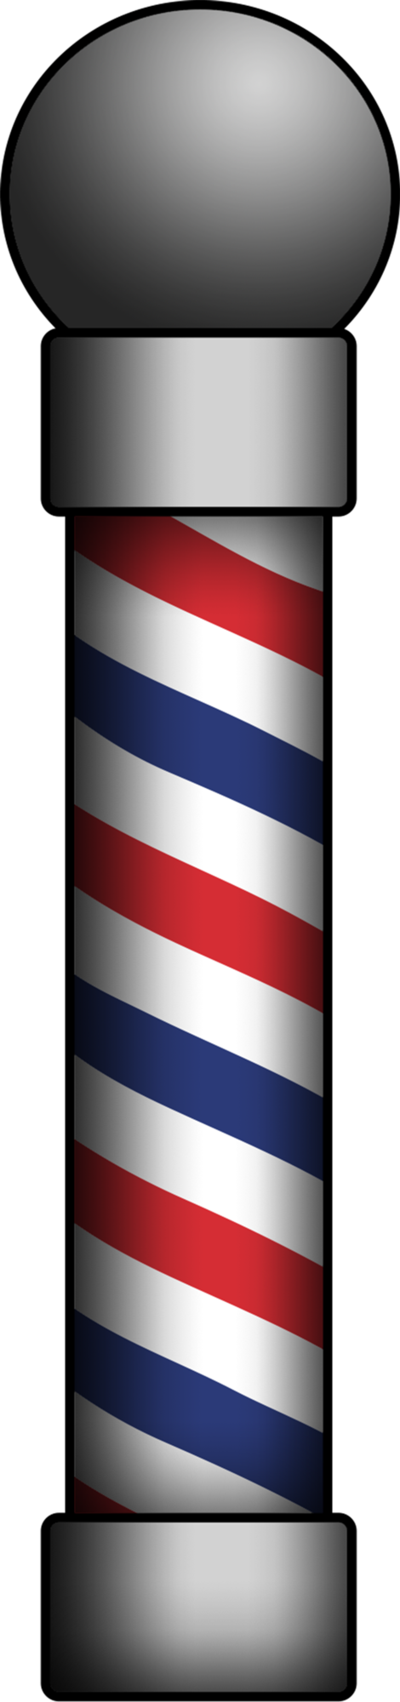 Explore Freeillustration On Deviantart Barber Pole - Explore Freeillustration On Deviantart Barber Pole (400x1702)